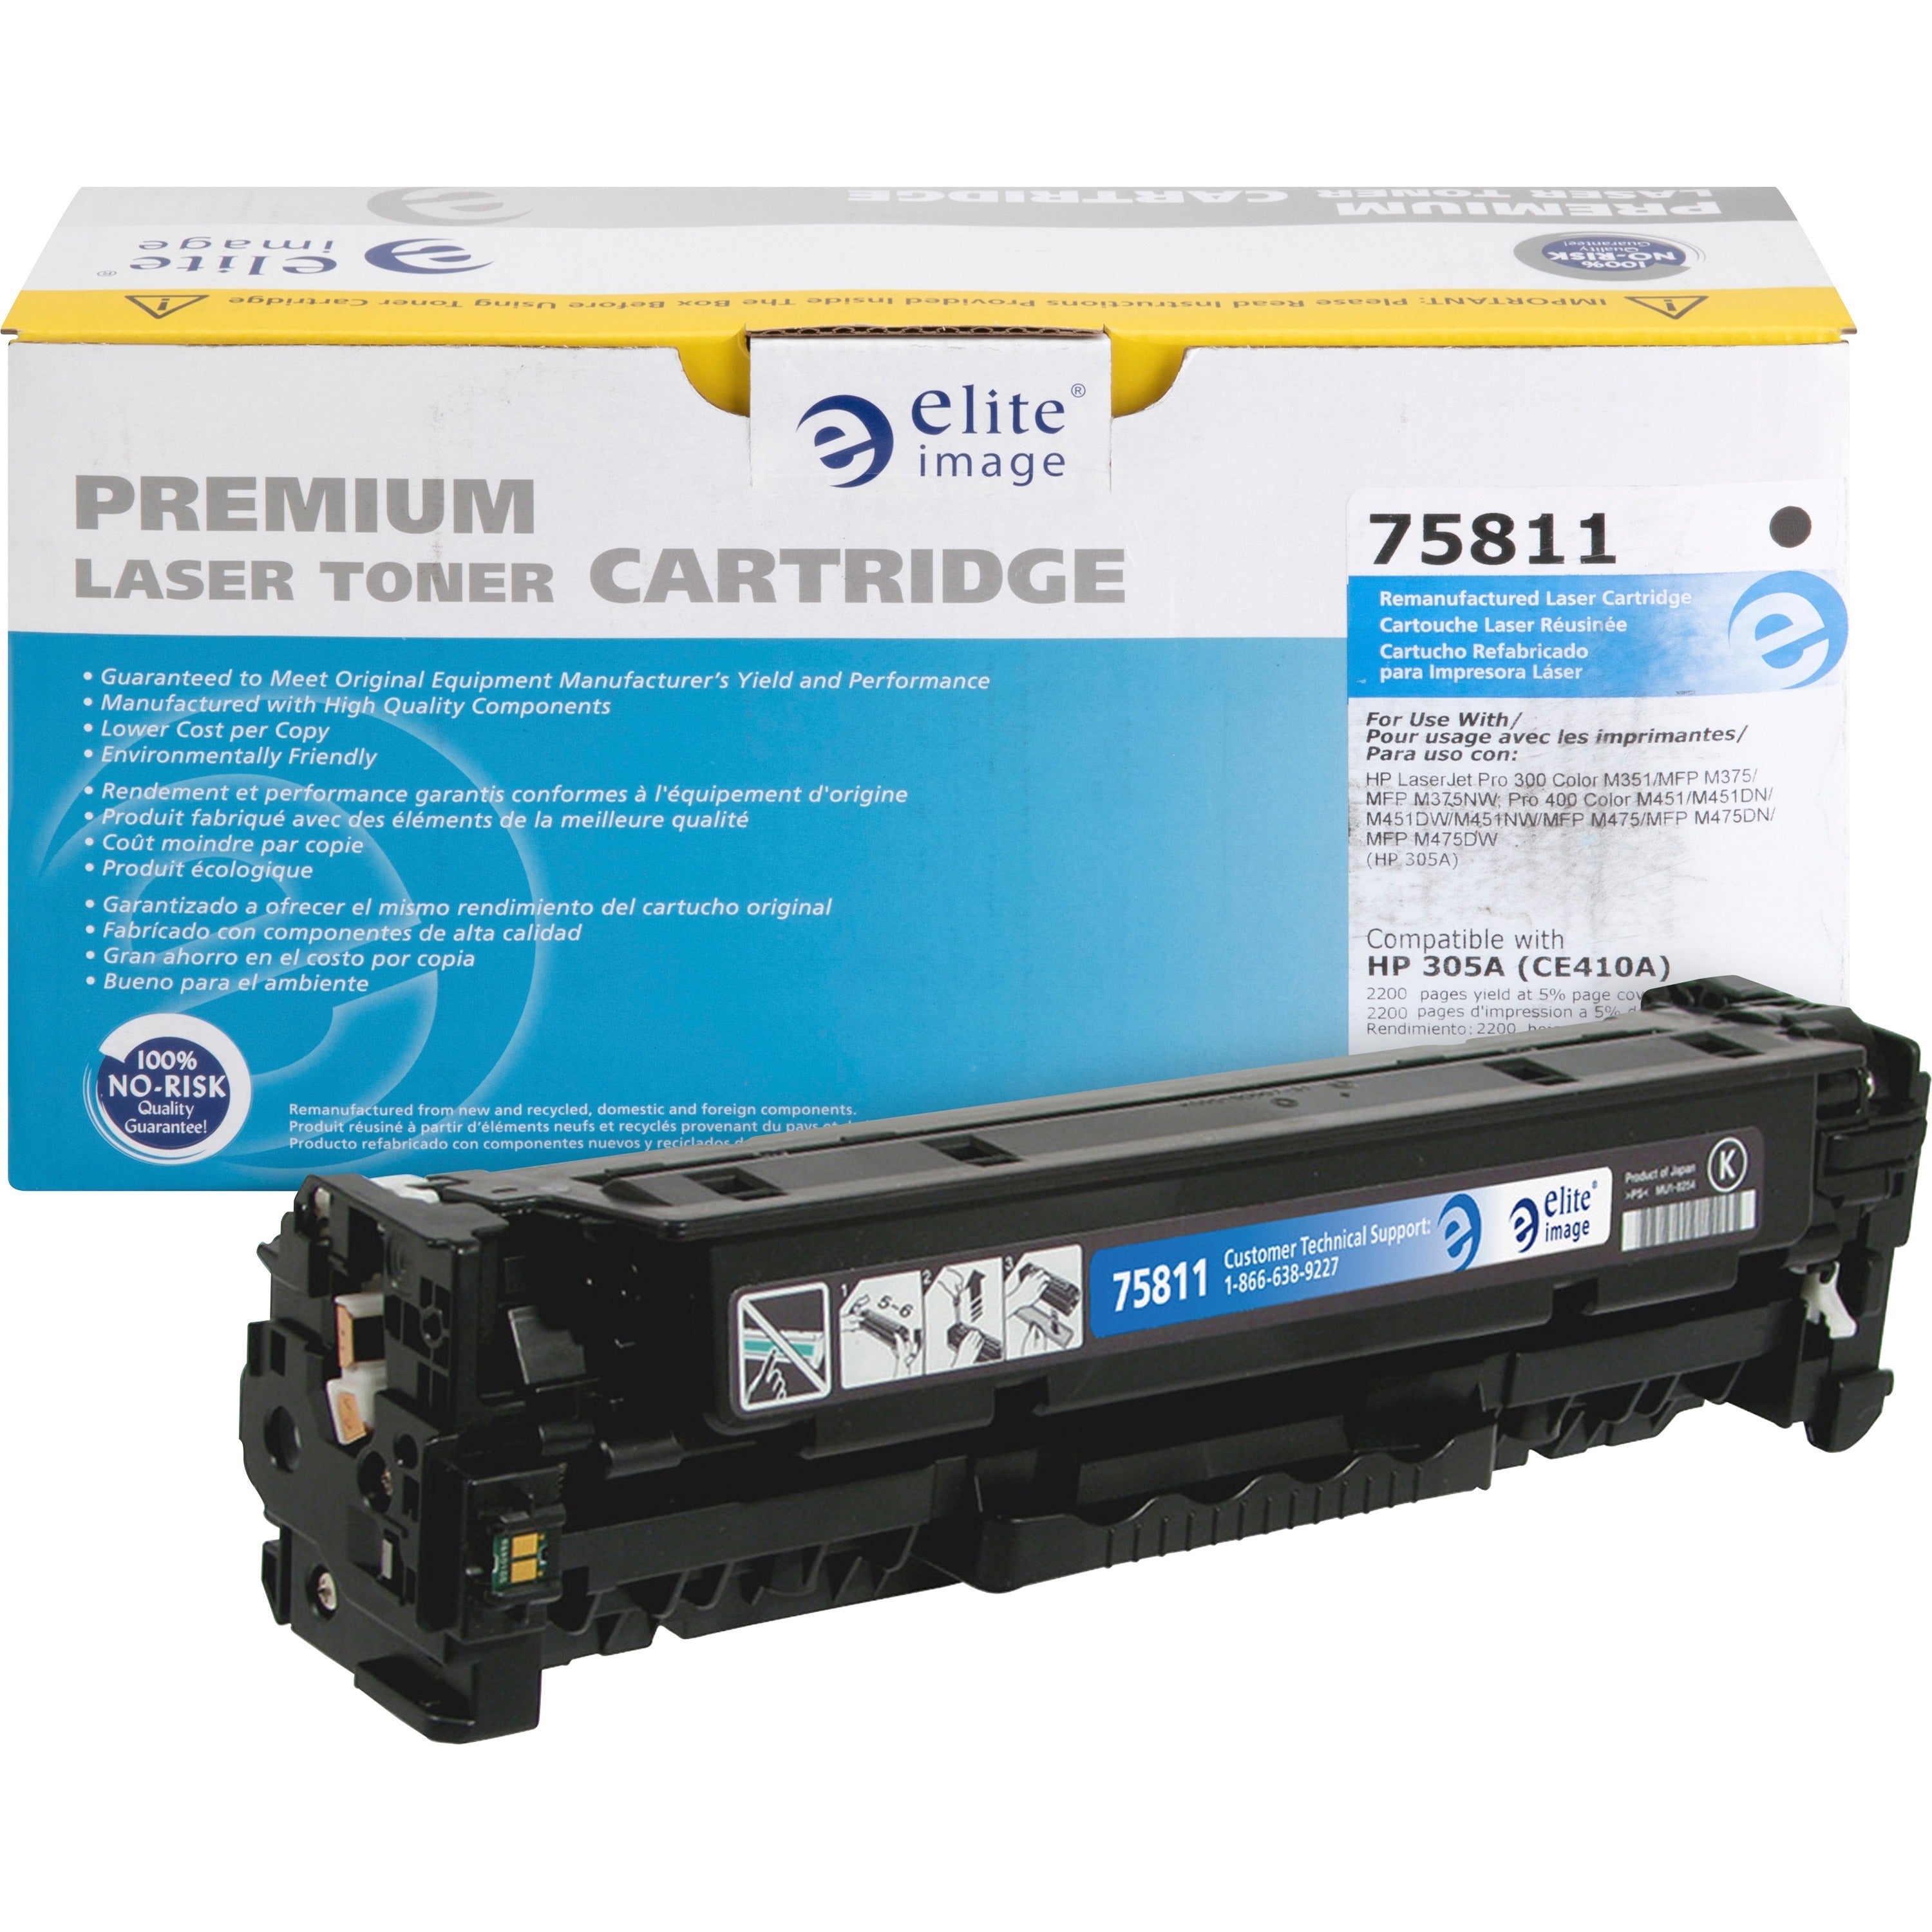 Elite Image Remanufactured Laser Toner Cartridge - Alternative for HP 305A (CE410A) - Black - 1 Each - 2200 Pages - 1